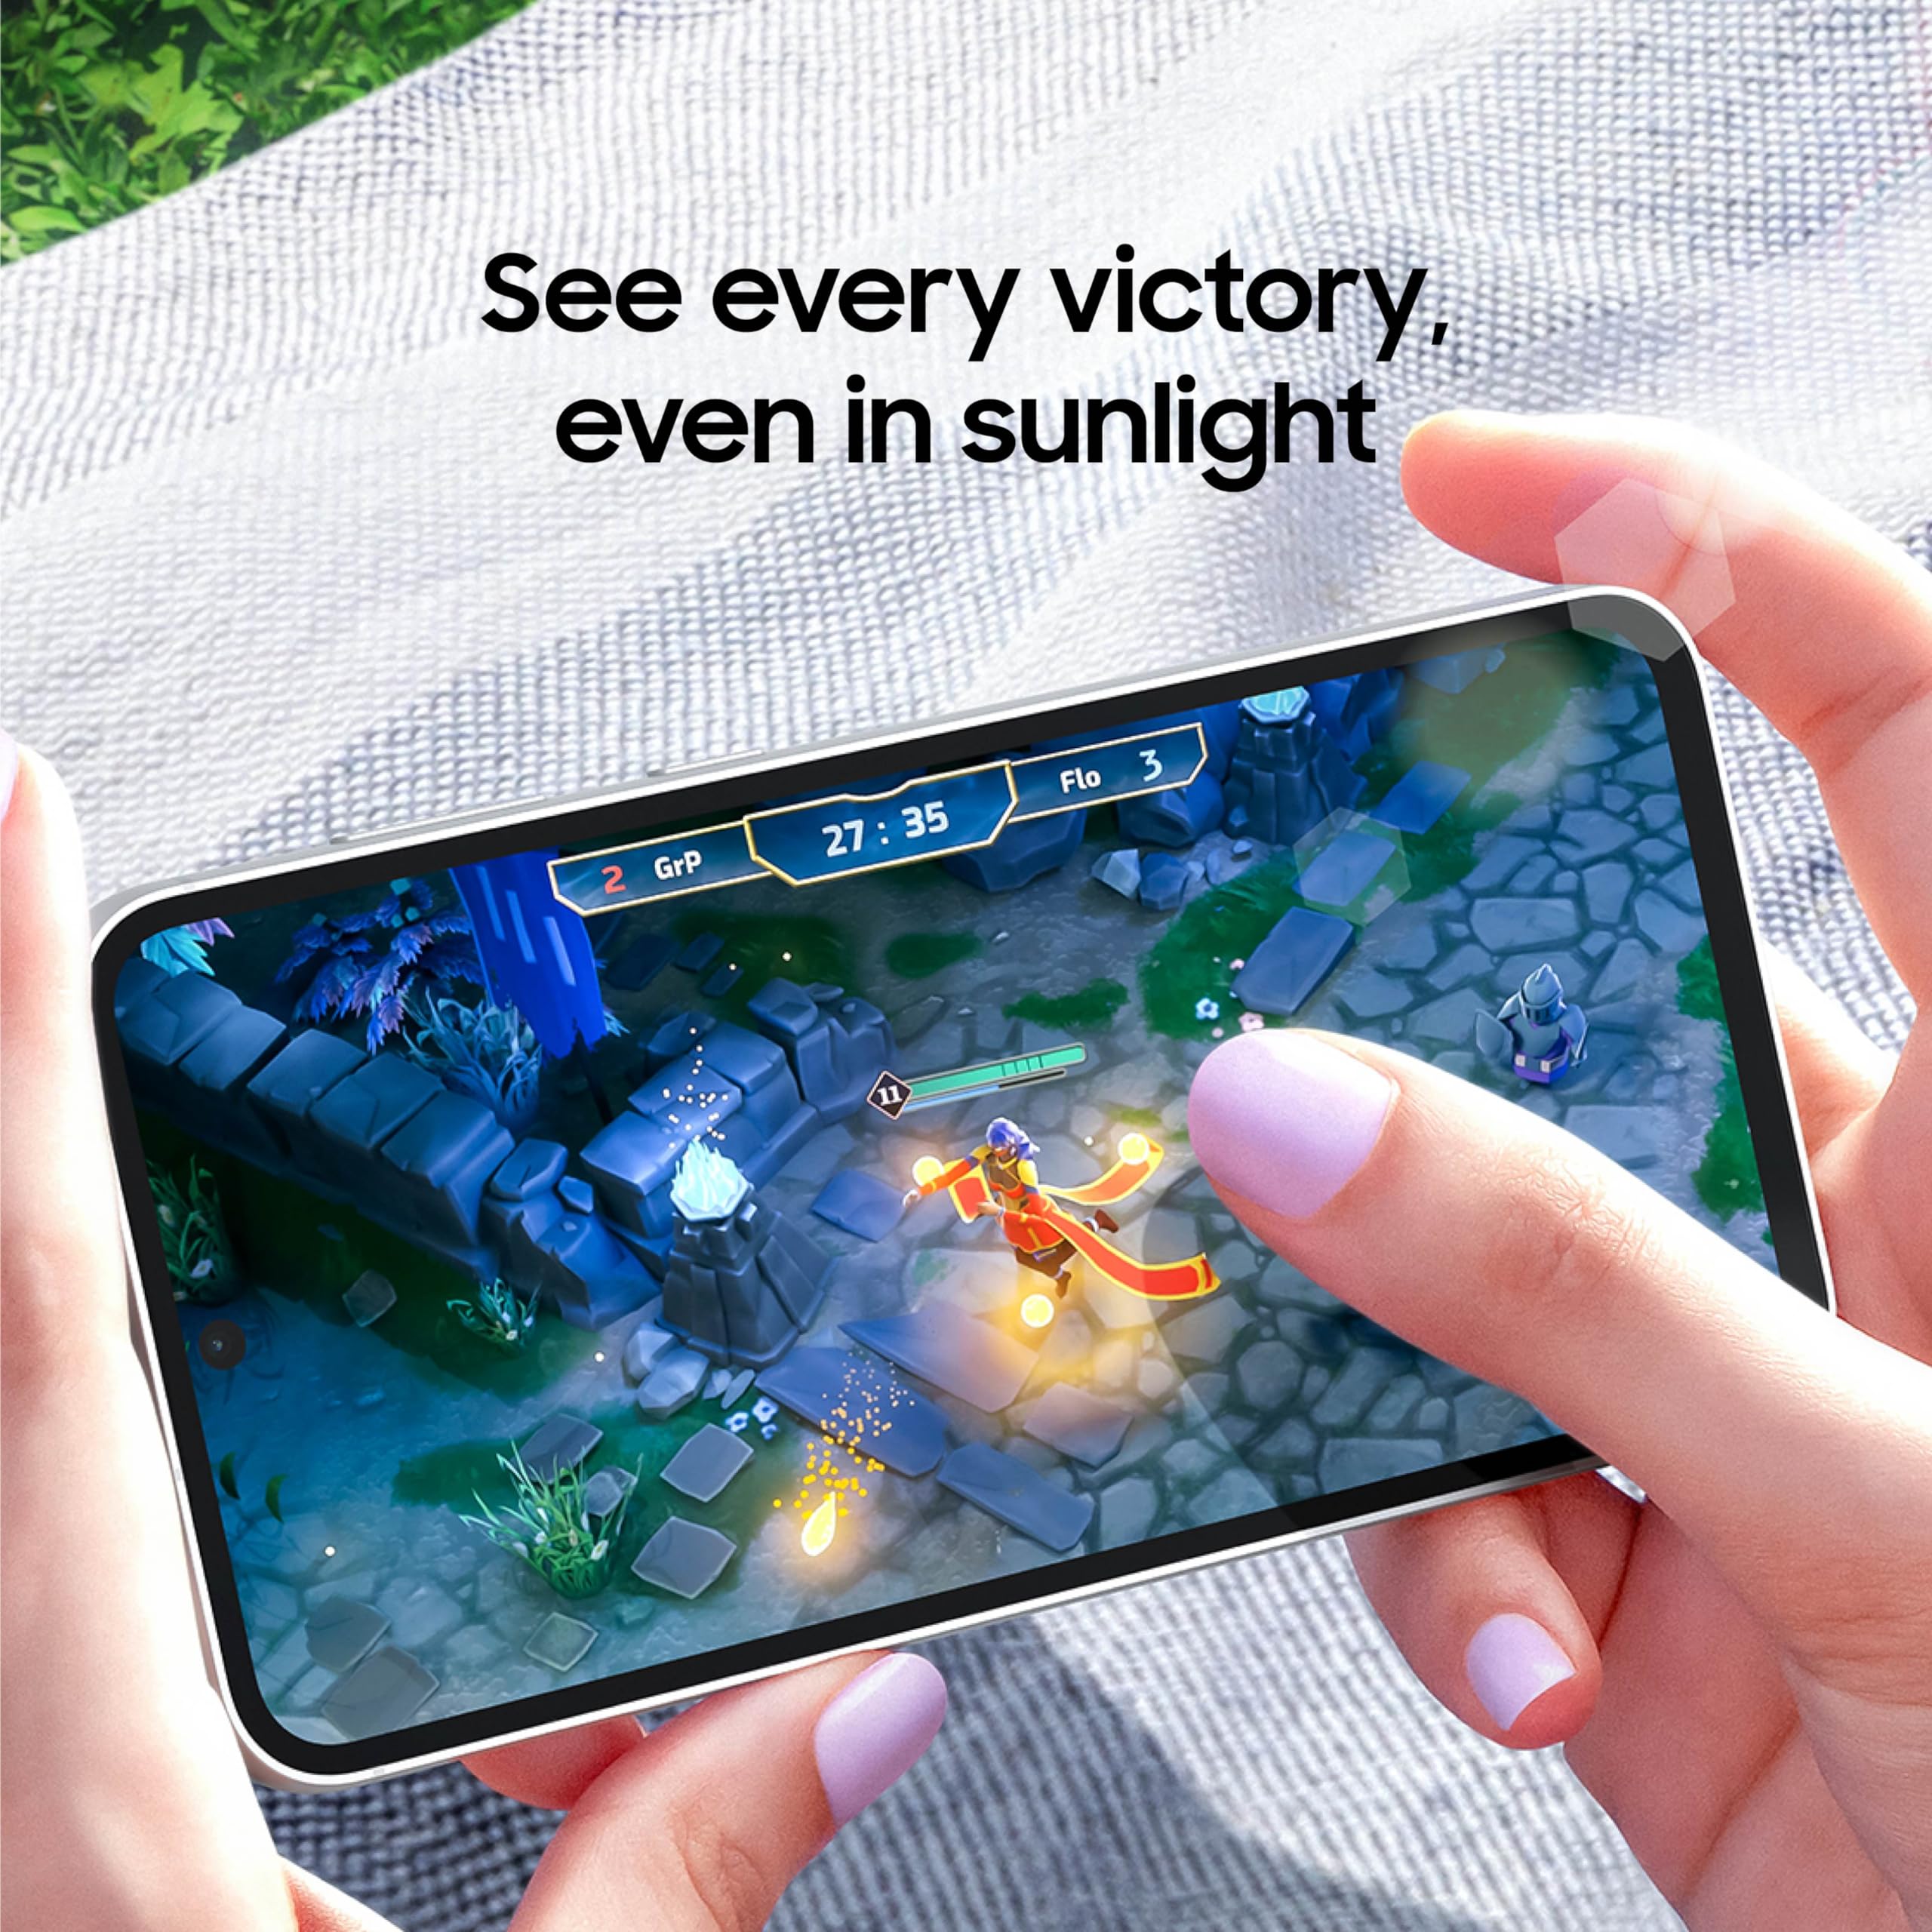 SAMSUNG Galaxy S23 FE Cell Phone, 256GB, Unlocked Android Smartphone, Long Battery Life, Premium Processor, Tough Gorilla Glass Display, Hi-Res 50MP Camera, US Version, 2023, Graphite